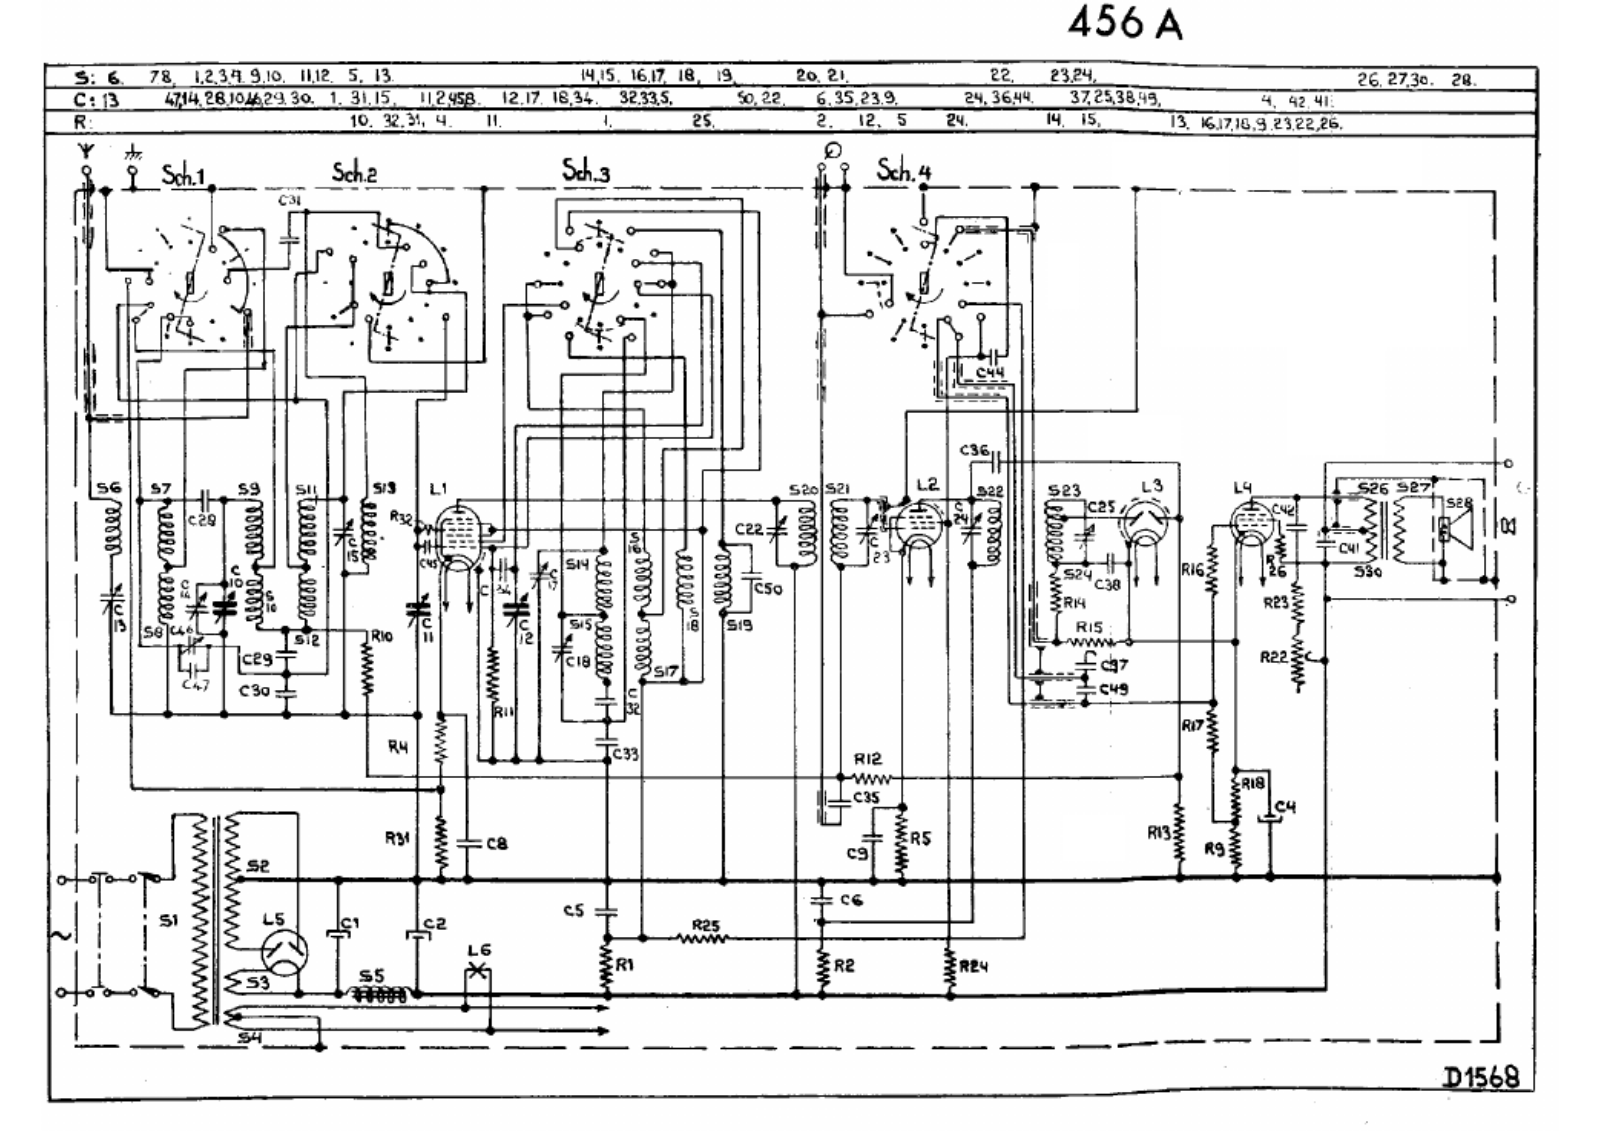 Philips 456a schematic